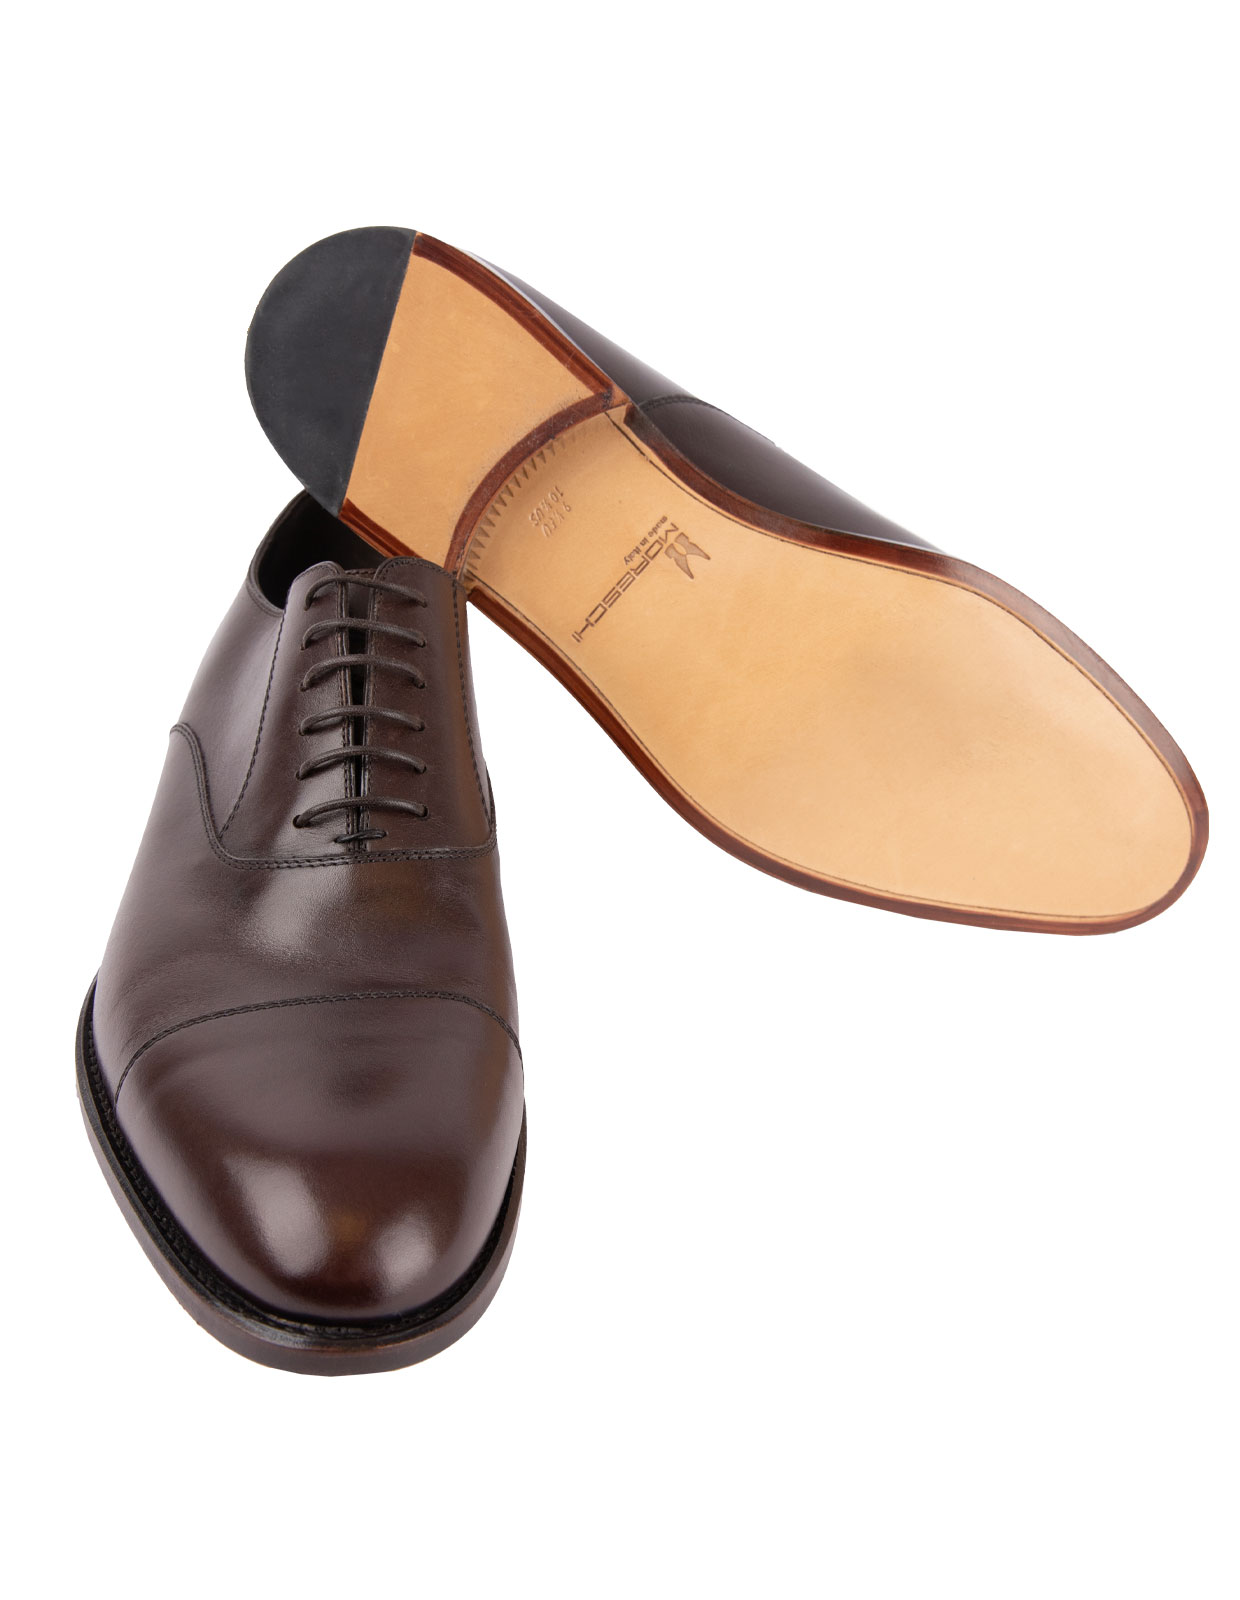 New York Oxford Shoes Calfskin Brown Stl 11